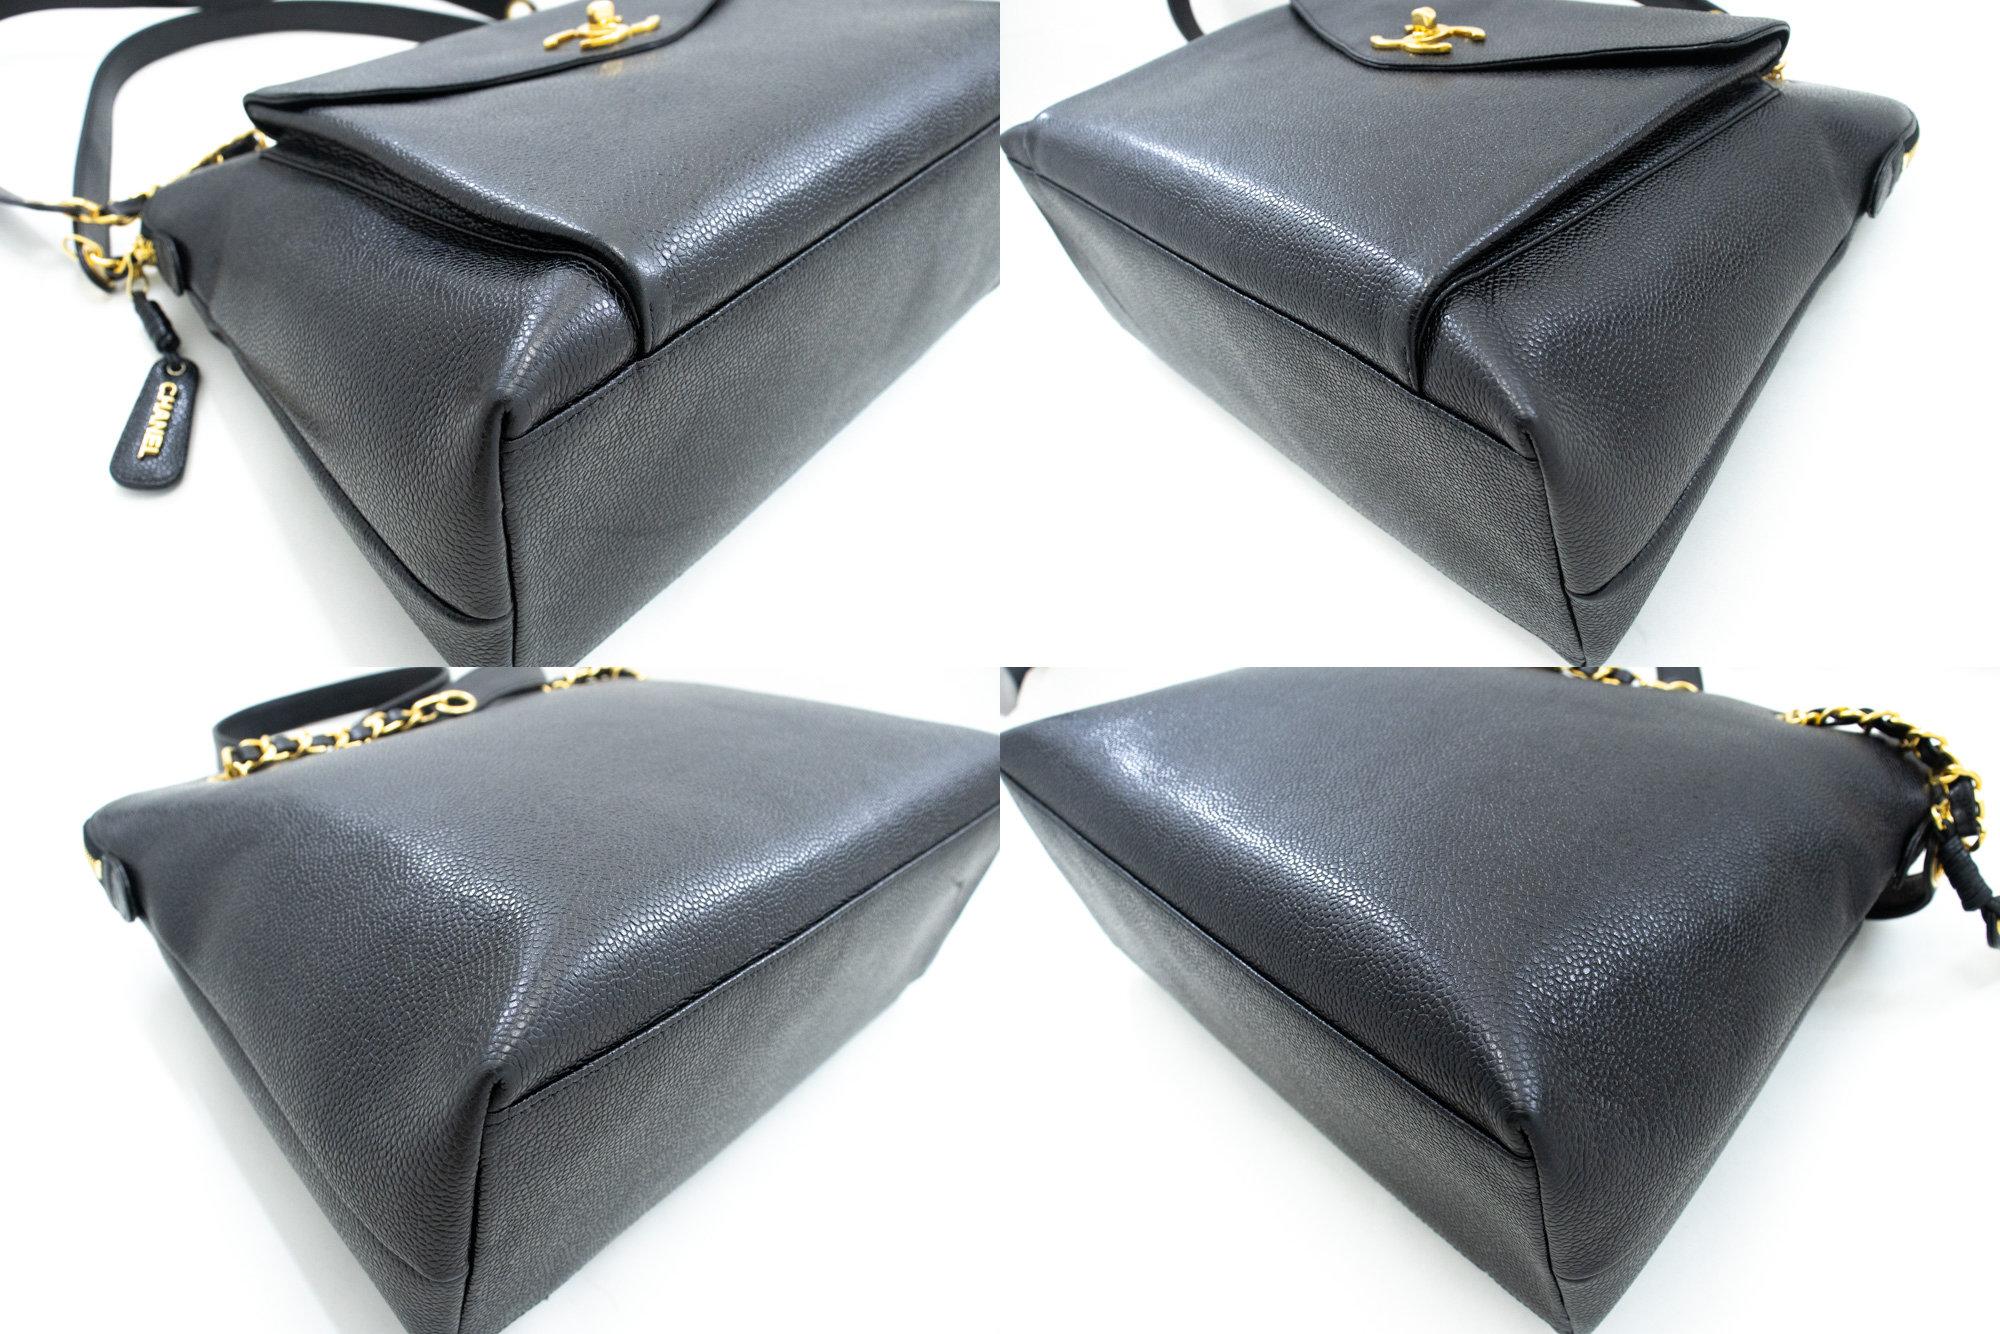 CHANEL Caviar Large Chain Shoulder Bag Leather Black Zip Goldper 2